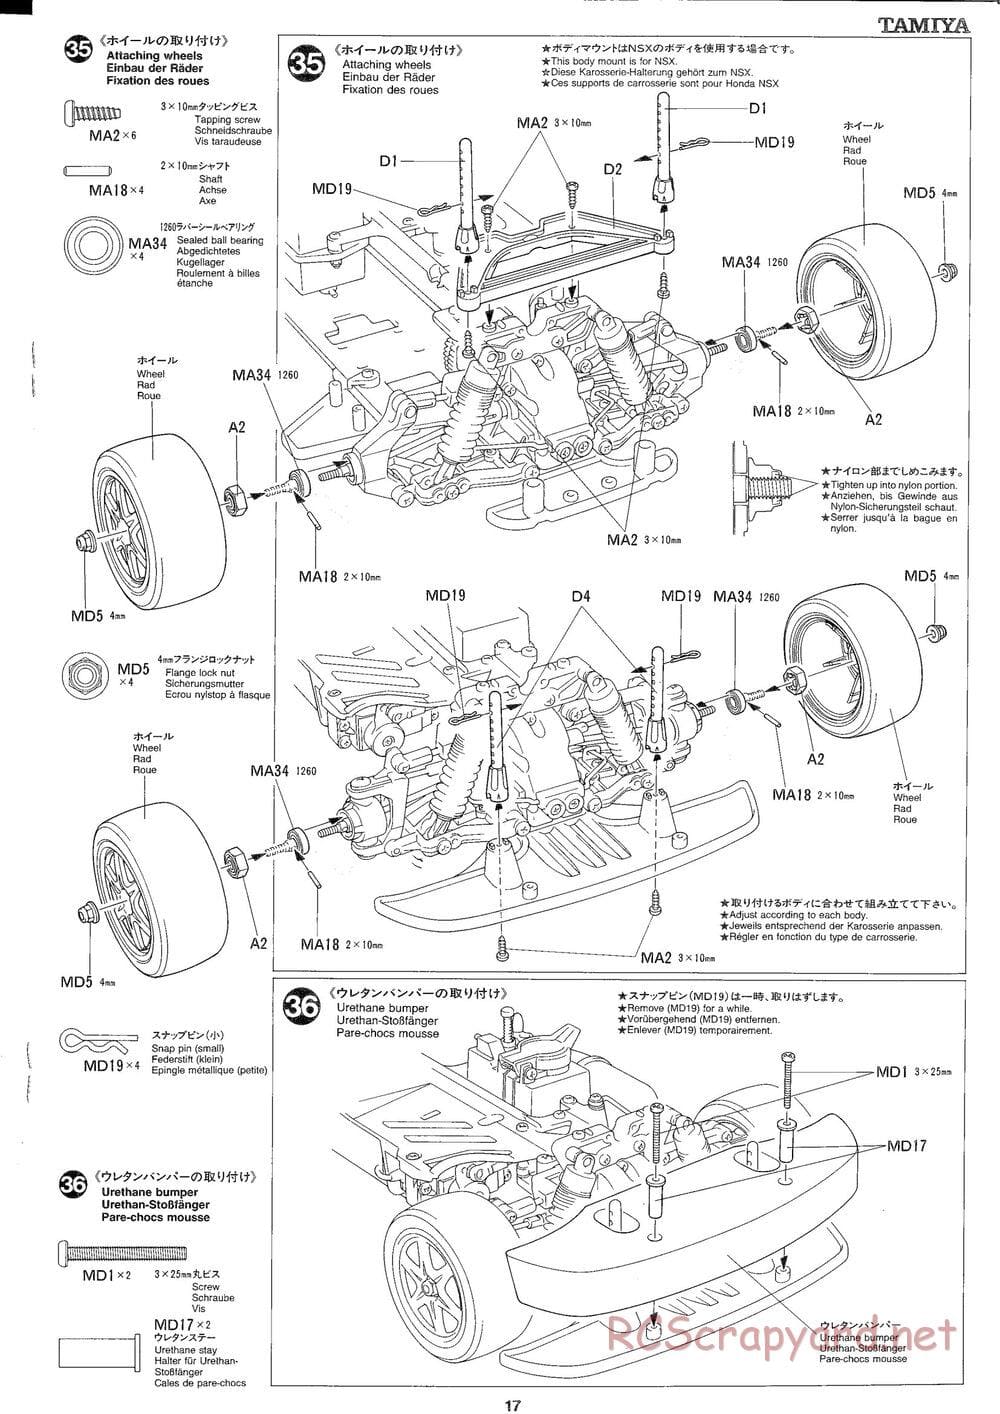 Tamiya - TGX Mk.1 TRF Special Chassis - Manual - Page 17